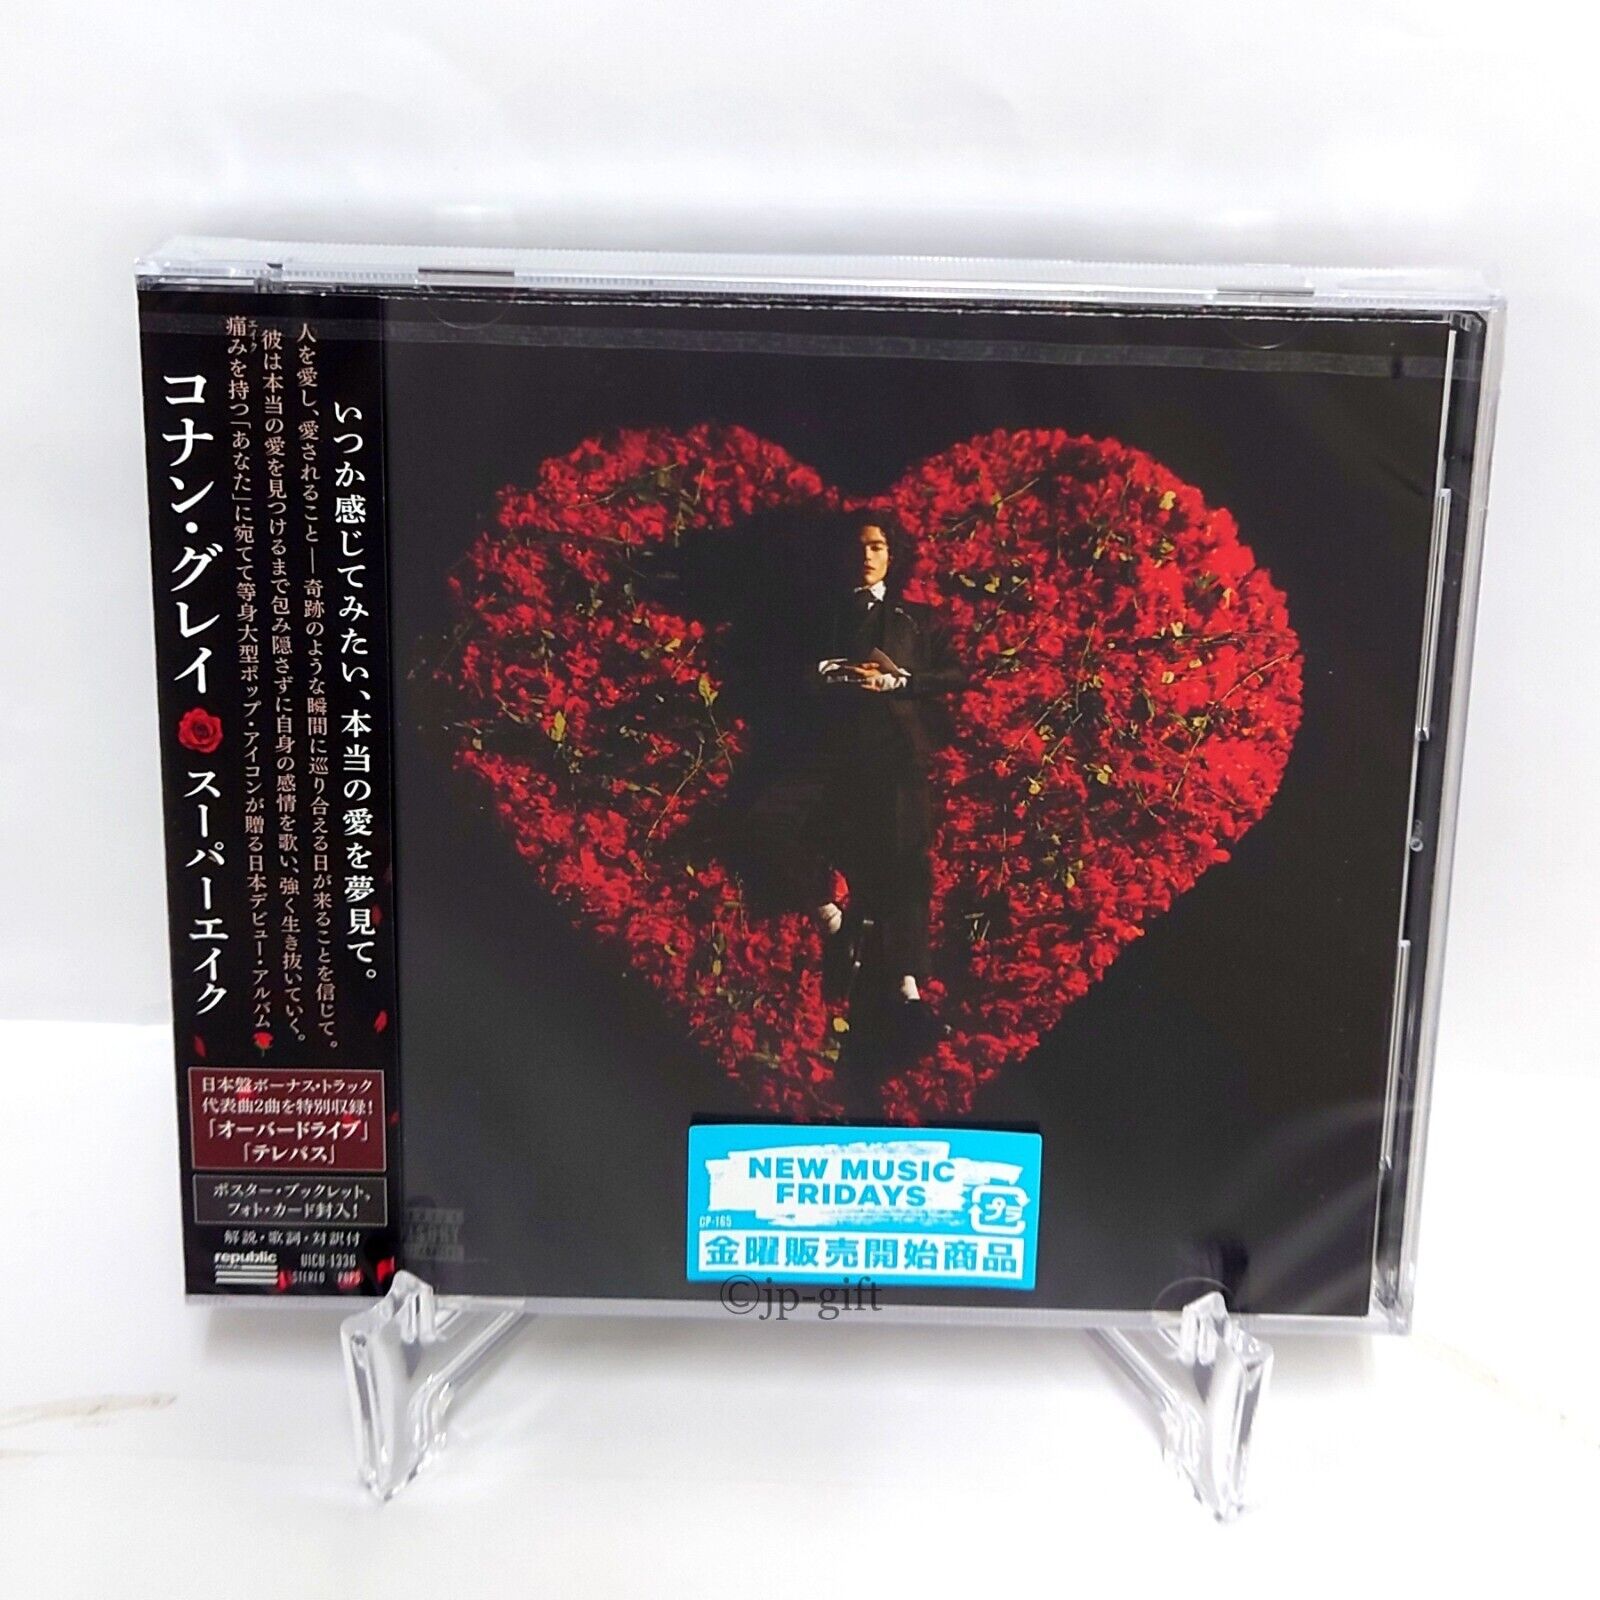 Conan Gray Superache Japan Music CD Bonus Tracks